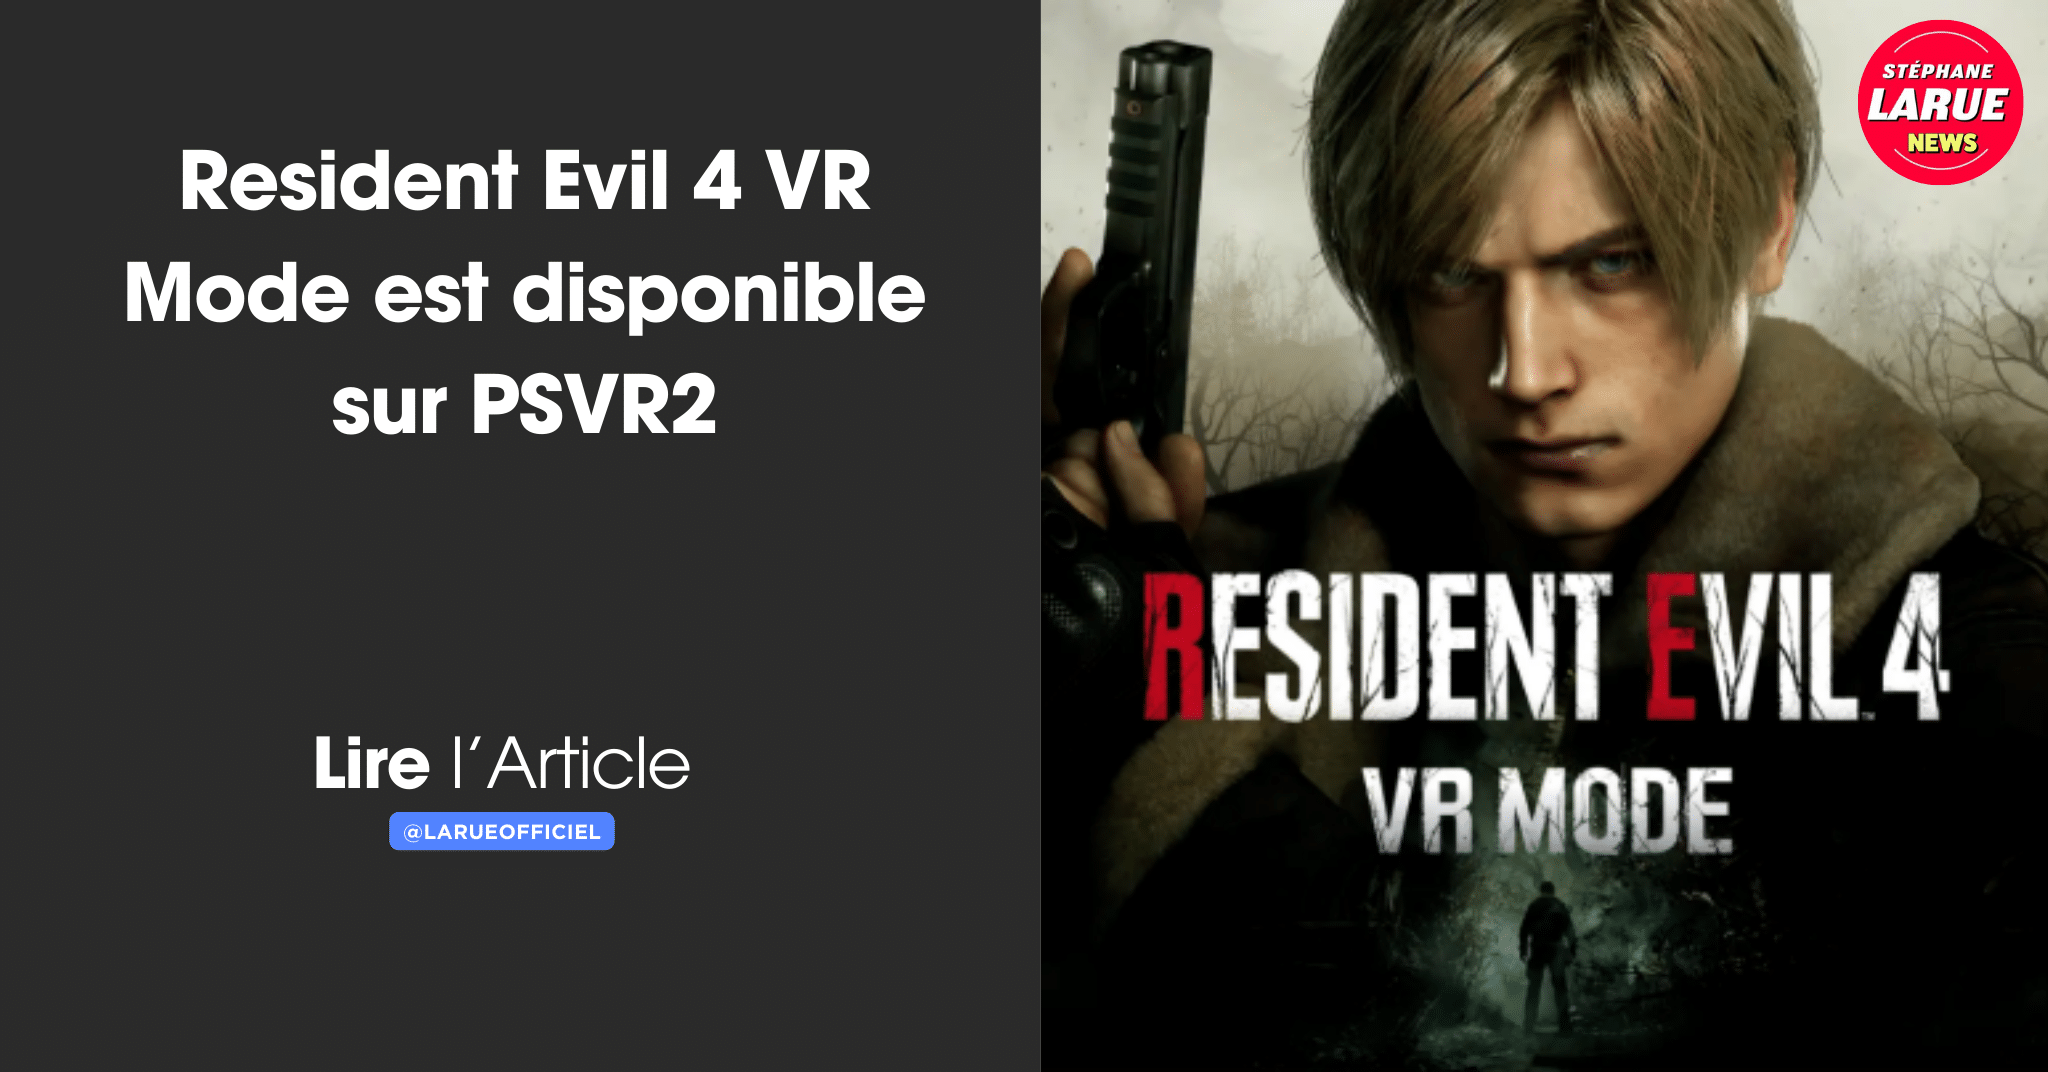 Resident Evil 4 VR Mode est disponible sur PSVR2